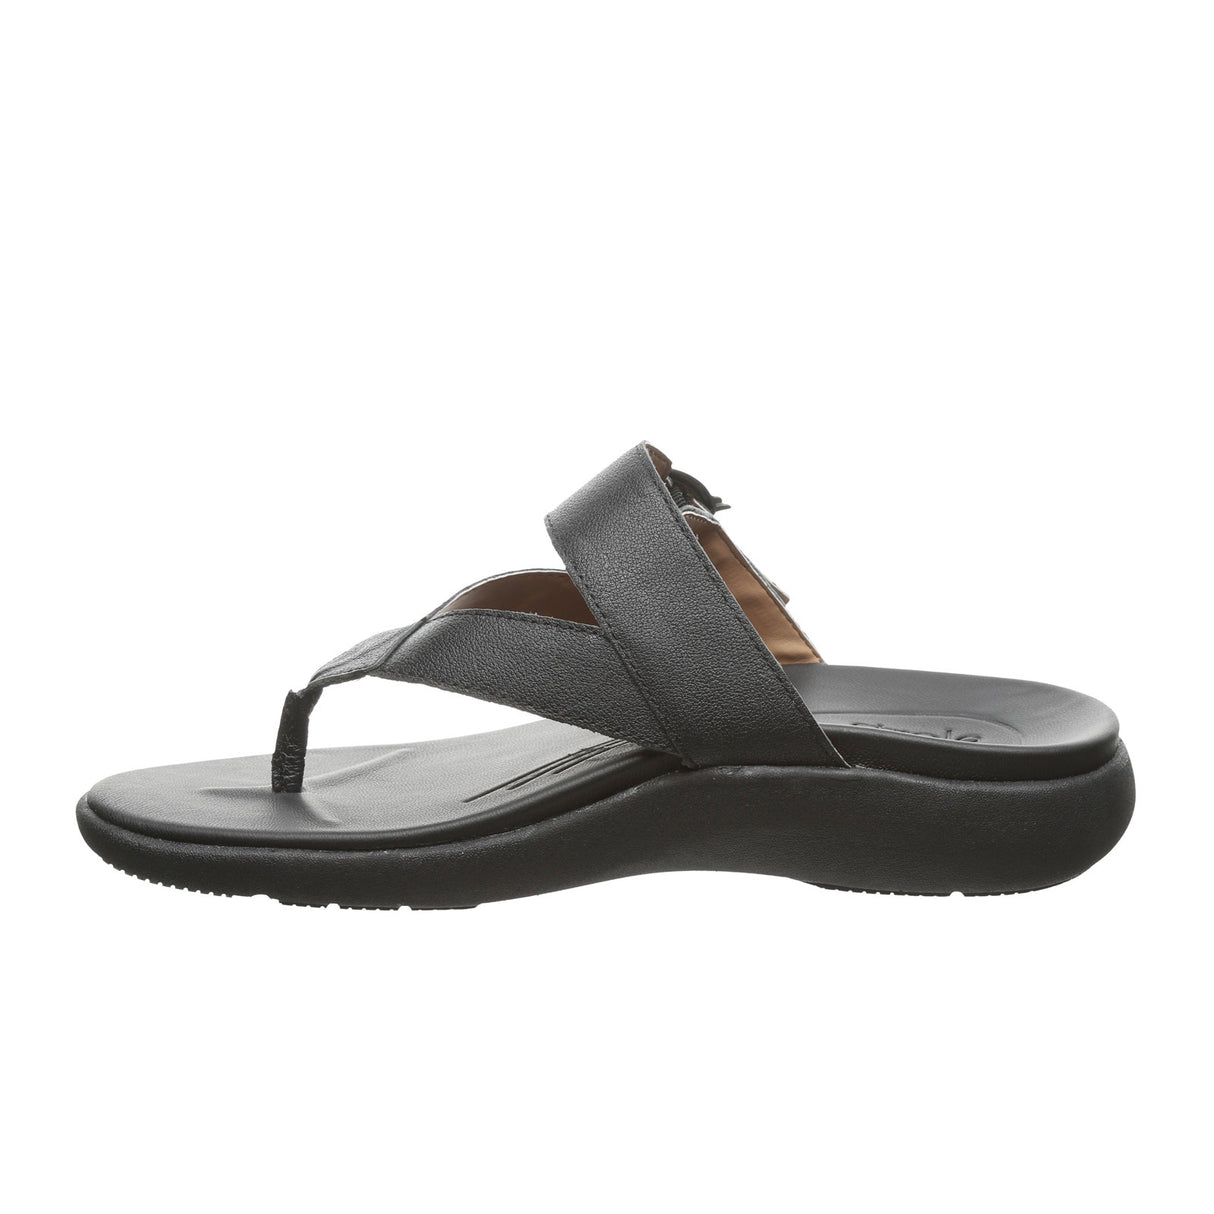 Strole Promenade Thong Sandal (Women) - Black 2 Sandals - Thong - The Heel Shoe Fitters